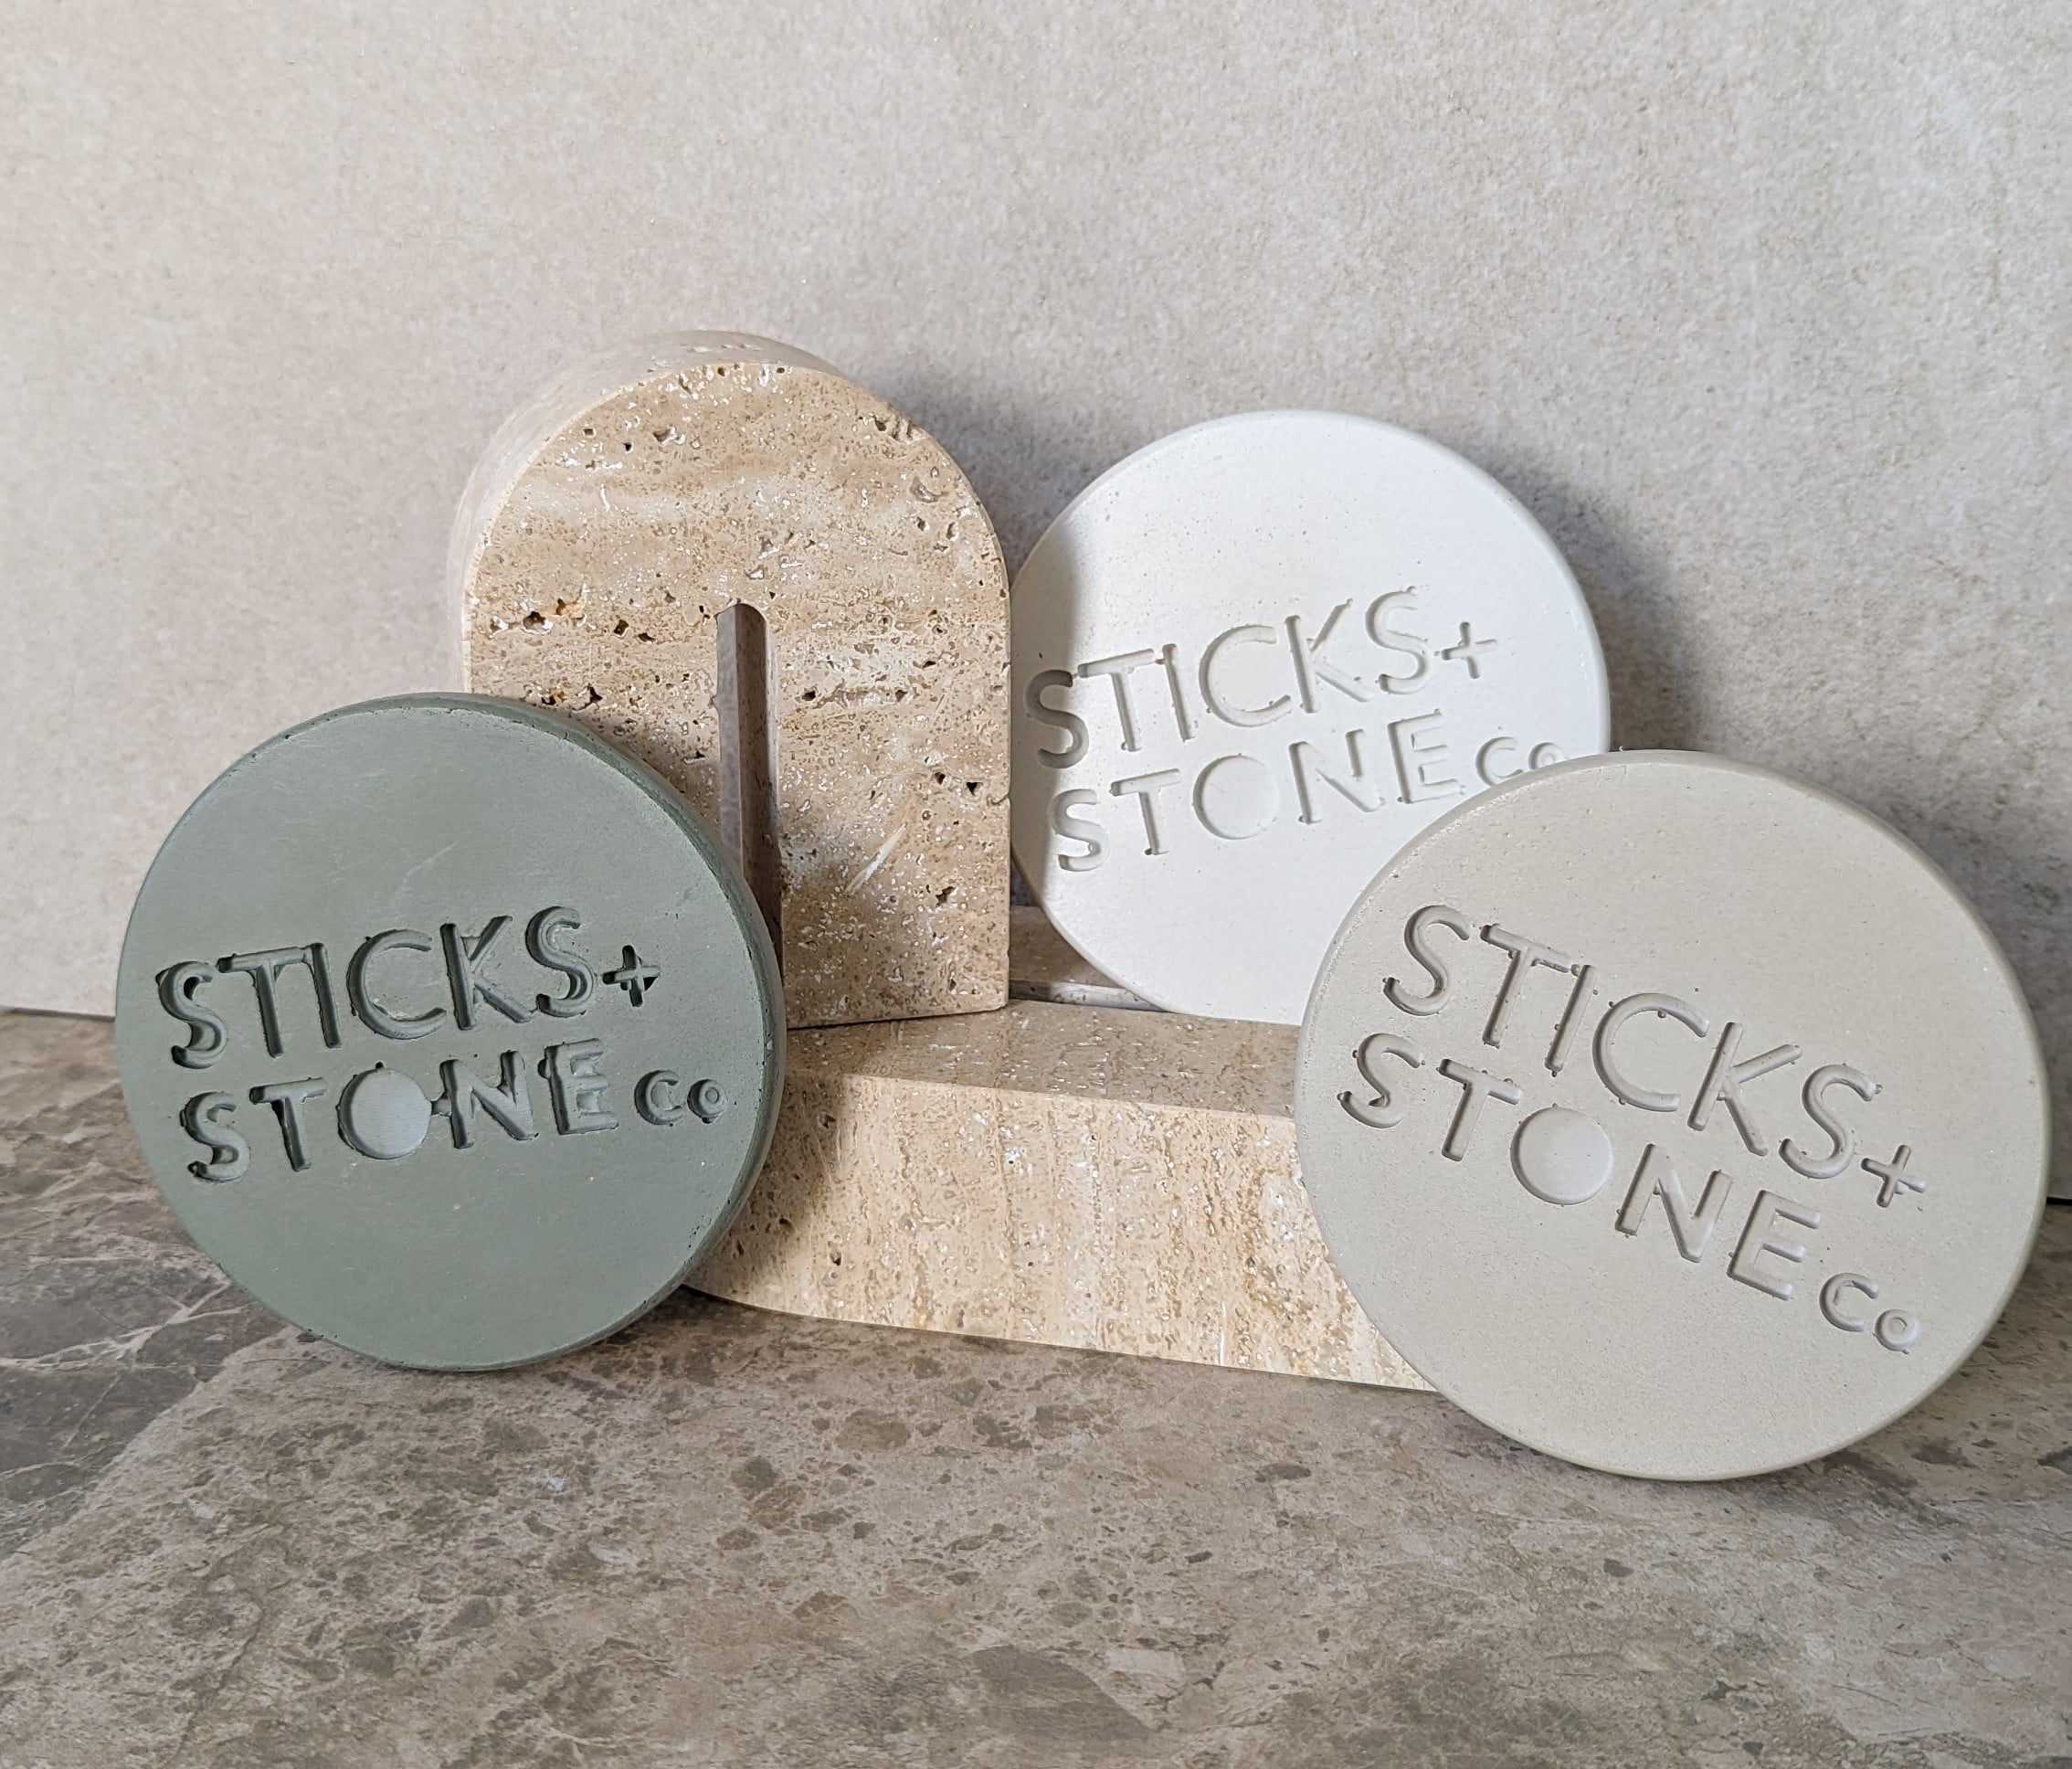 Supplier Feature: Sticks & Stones